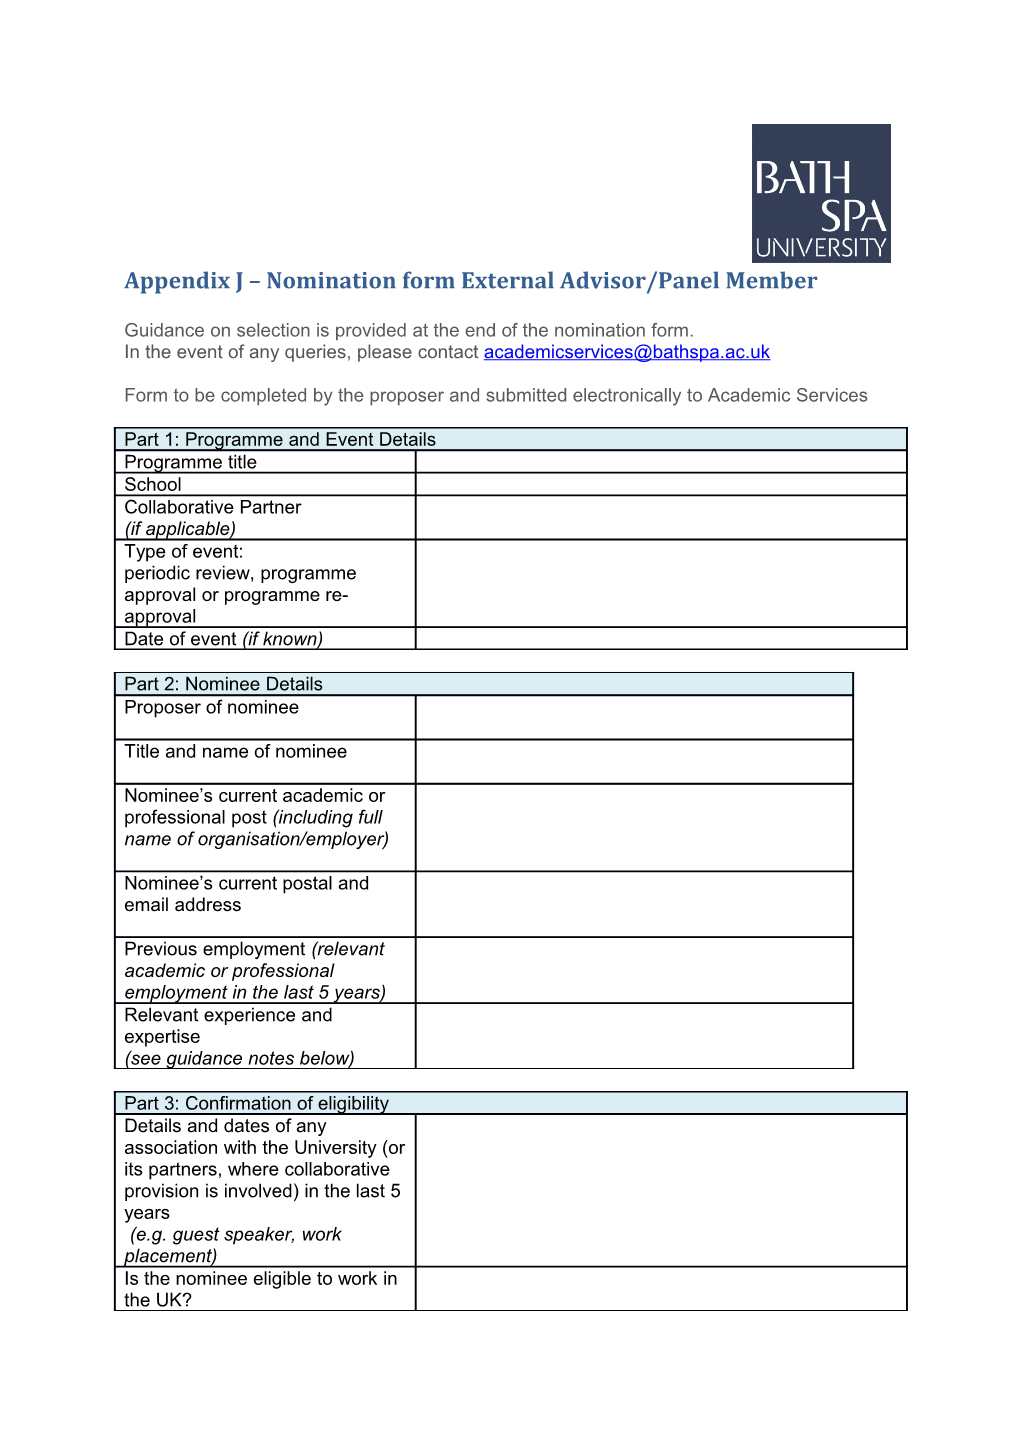 Appendix J Nomination Form External Advisor/Panel Member